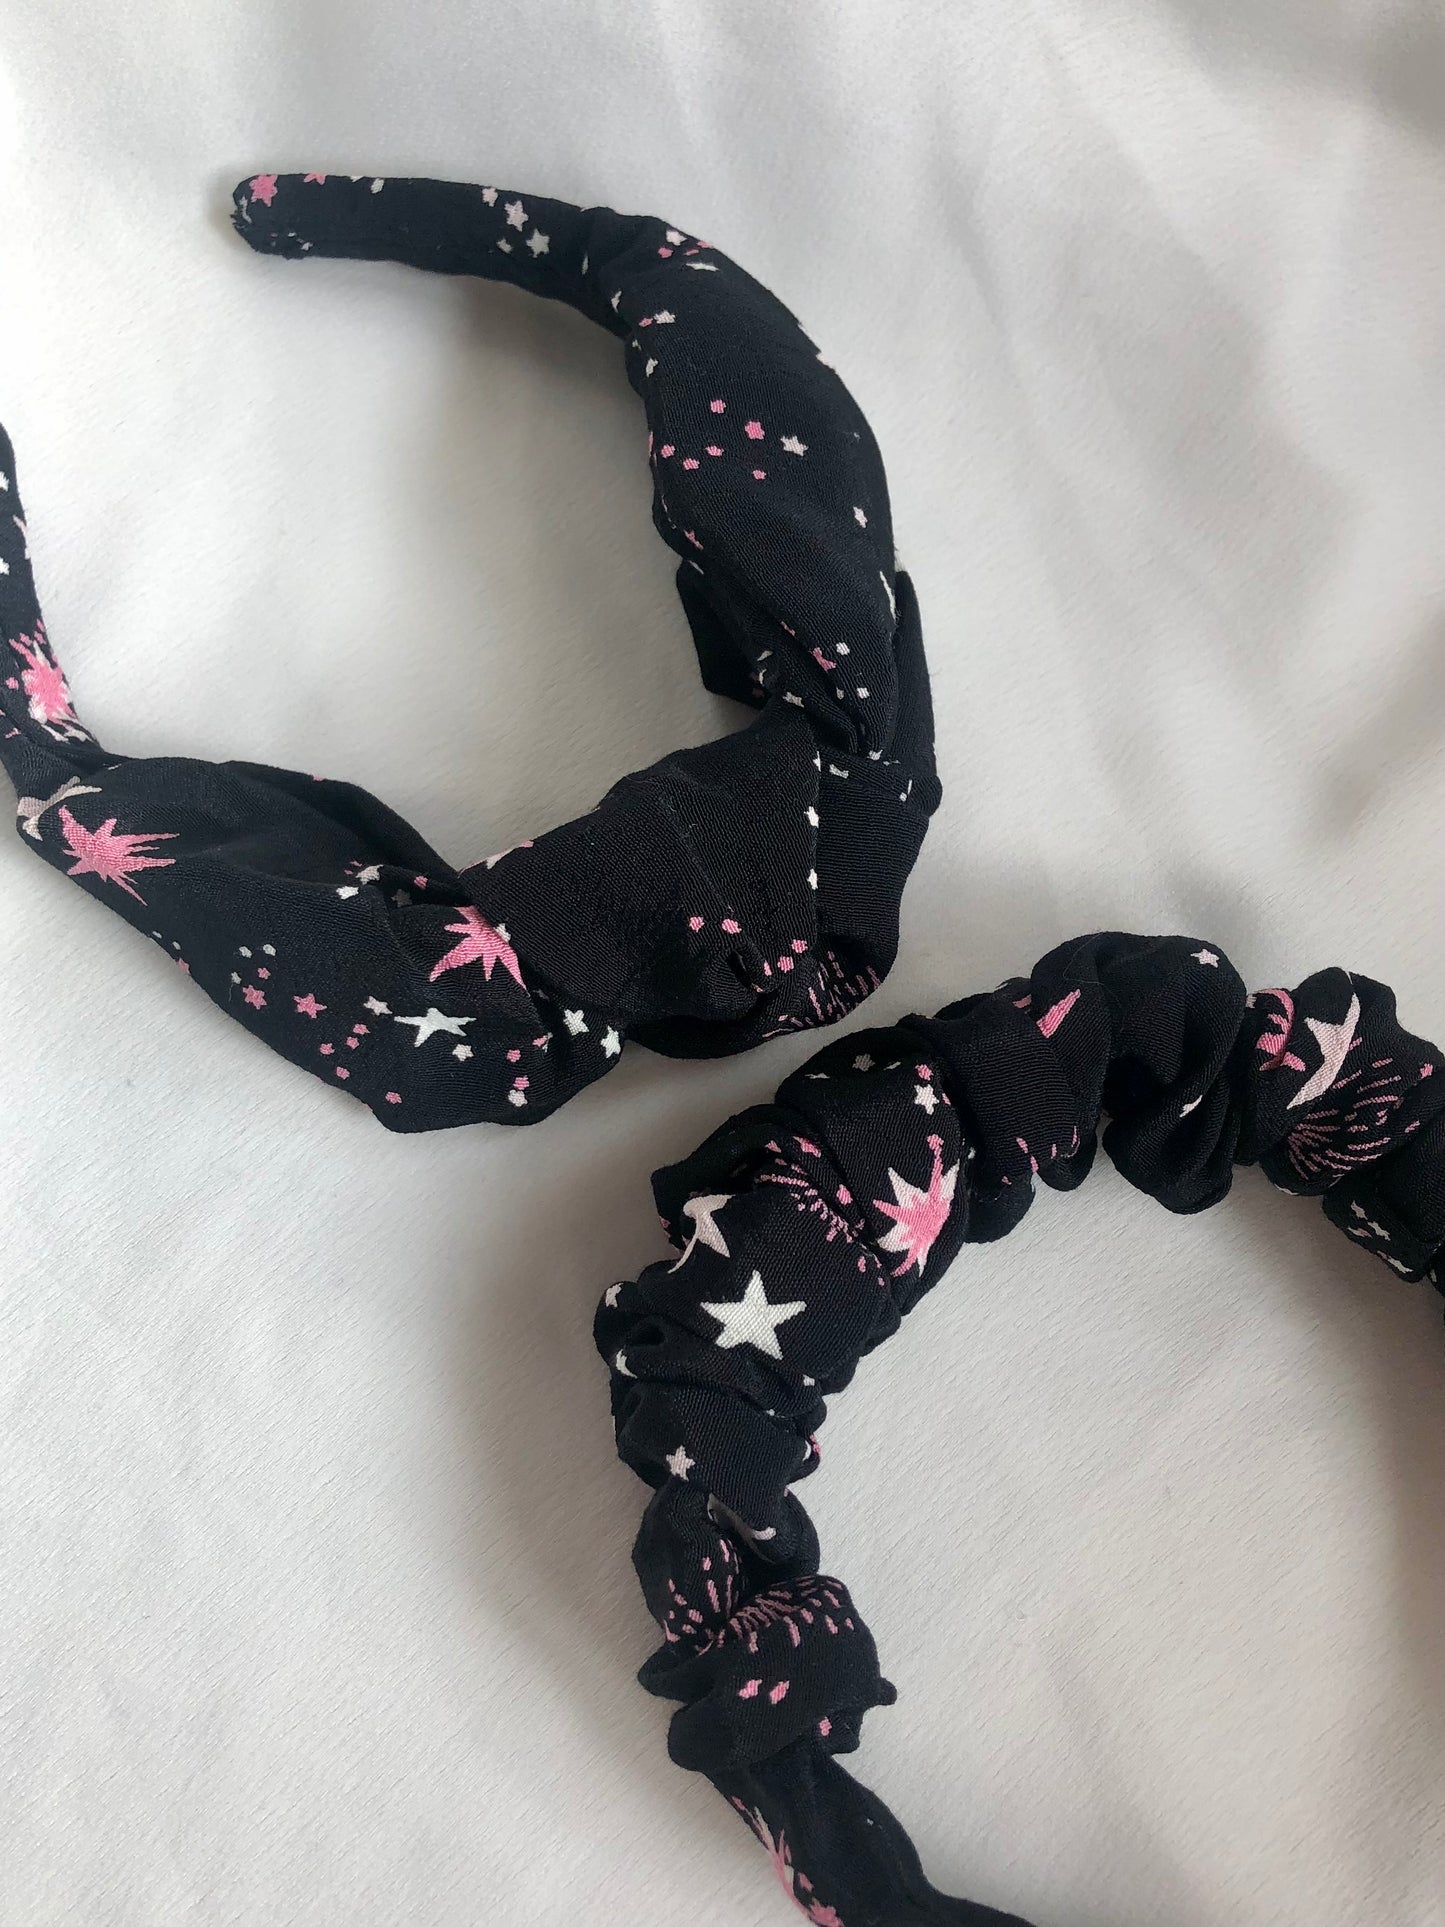 Sakura Pink & White Starry headband - choose style